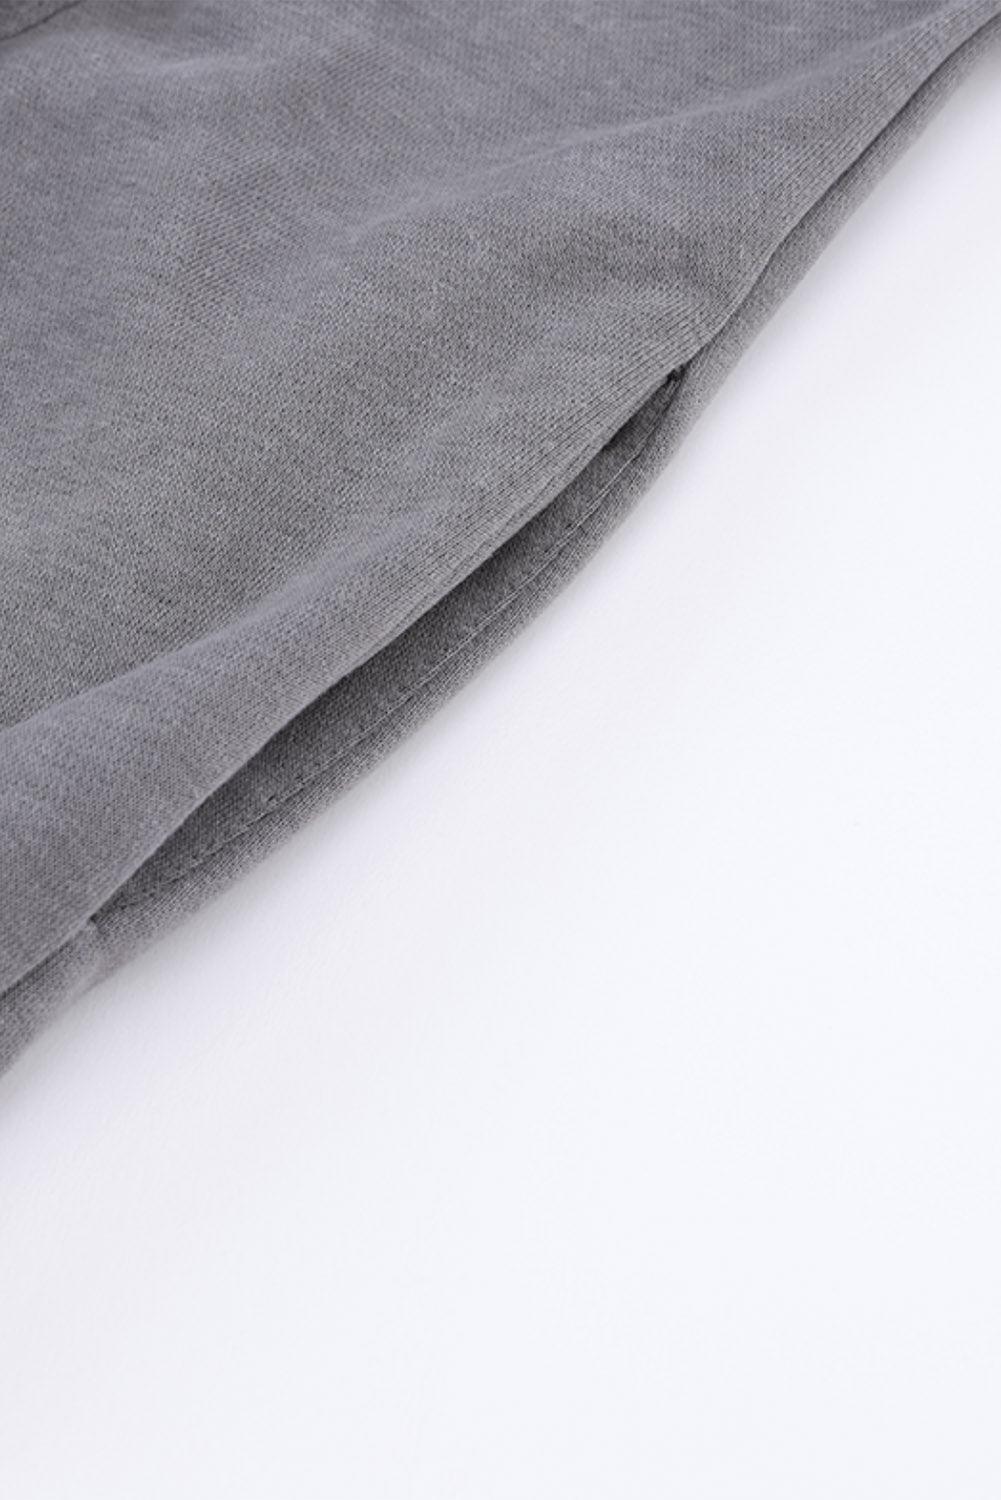 Gray Exposed Seam Twist Open Back Oversized Sweatshirt - L & M Kee, LLC